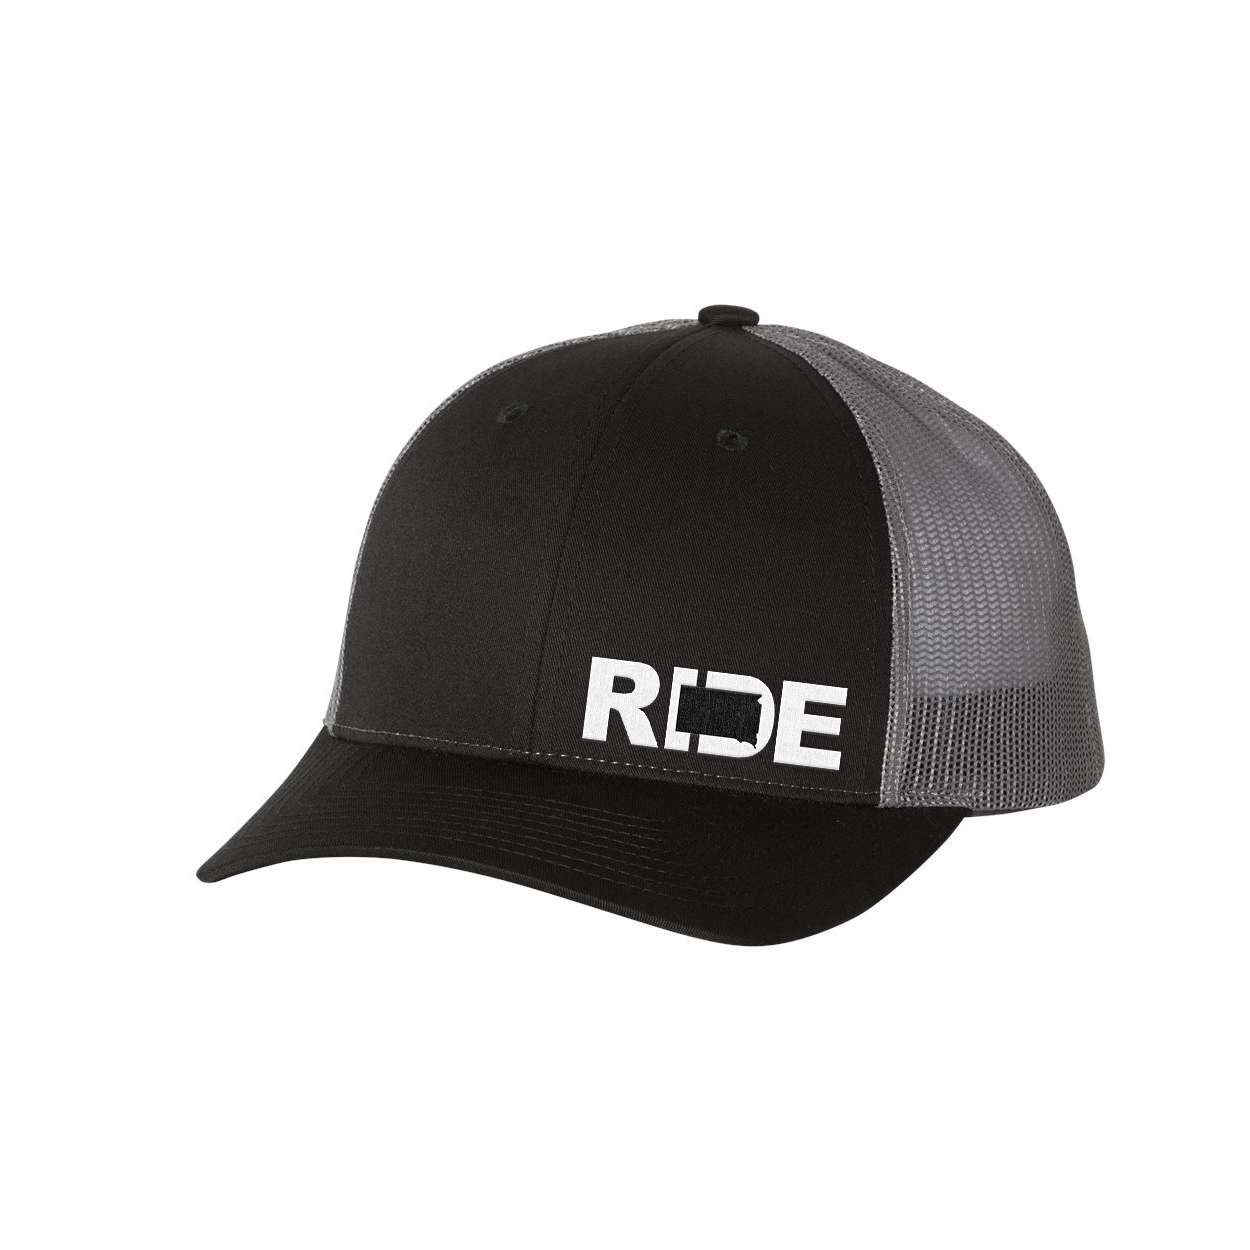 Ride South Dakota Night Out Pro Embroidered Snapback Trucker Hat Black/Gray